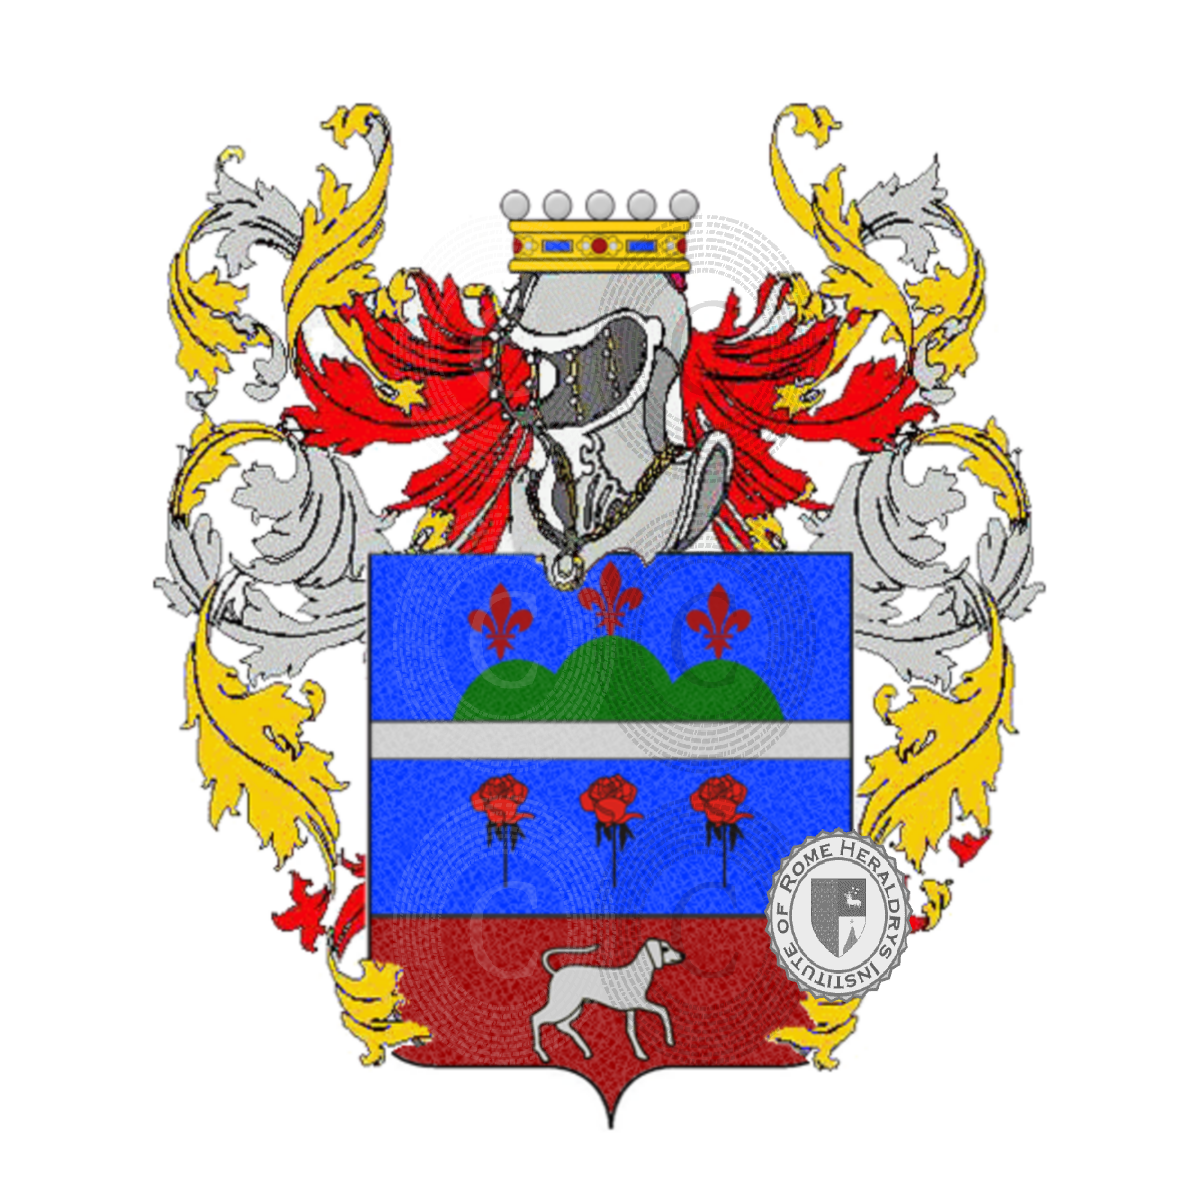 Brasão da famíliaArdenghi, Ardenghi,Baronci Turini,Turina,Turino,Turrini